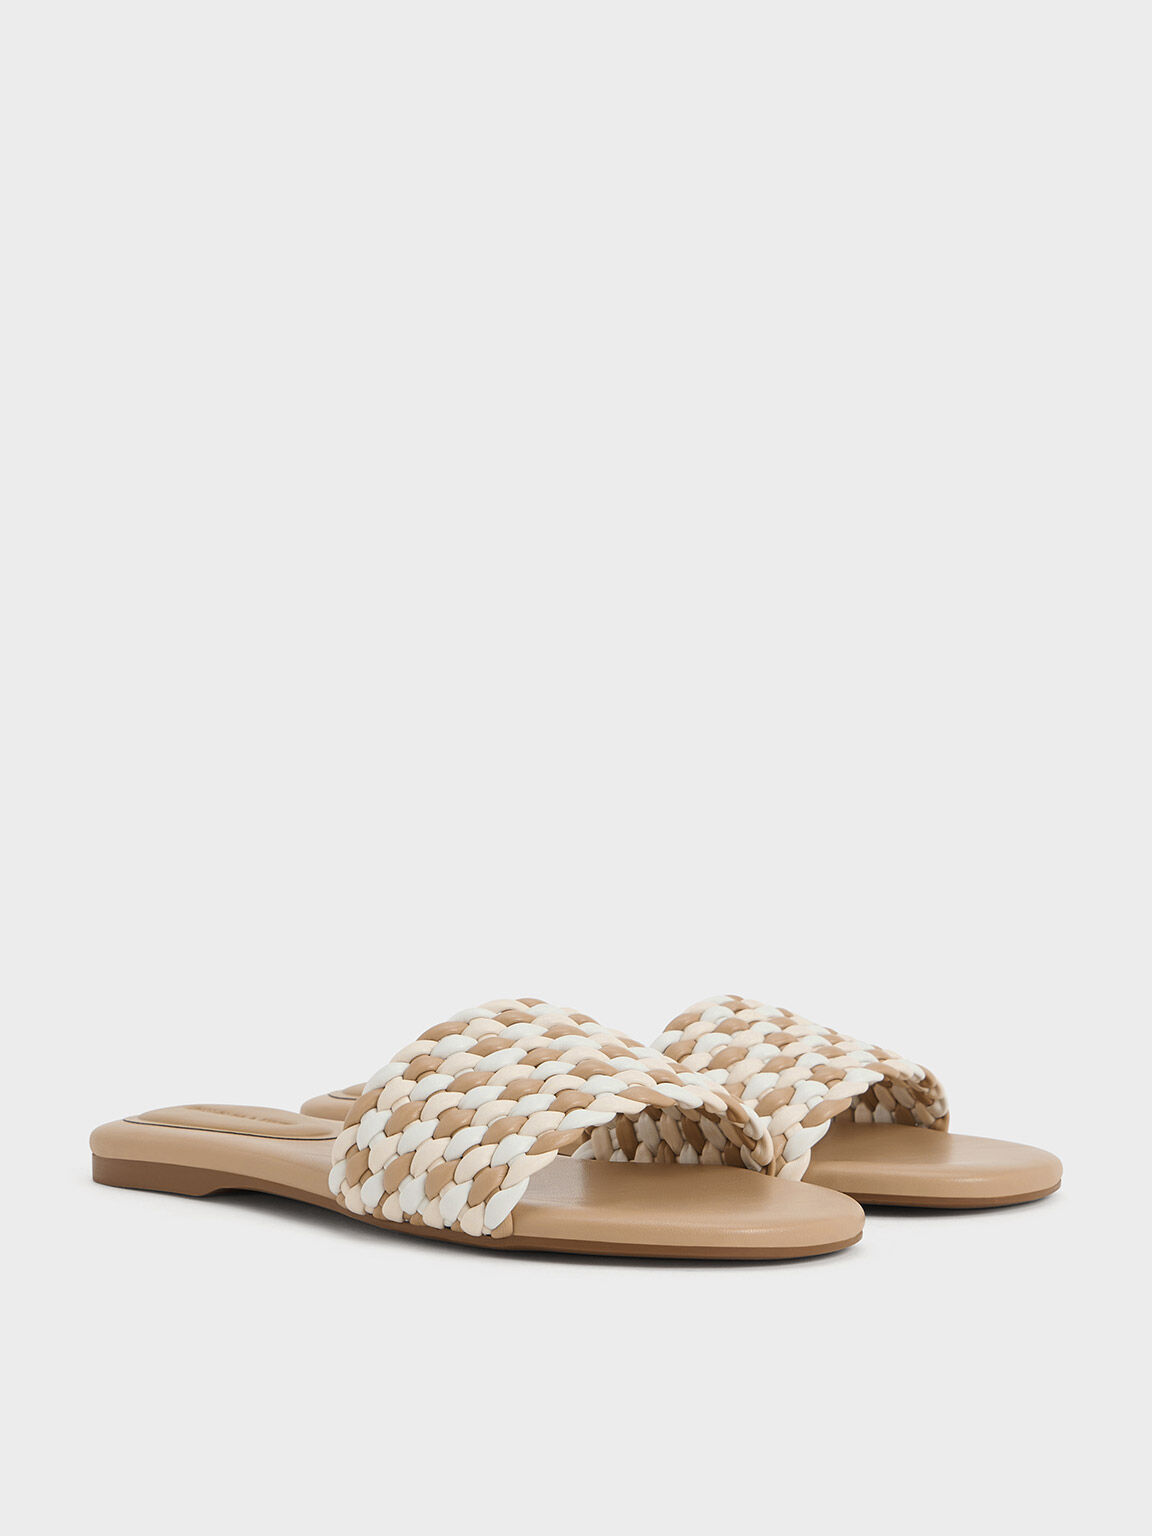 Sandal Slides Open-Toe Woven, Multi, hi-res